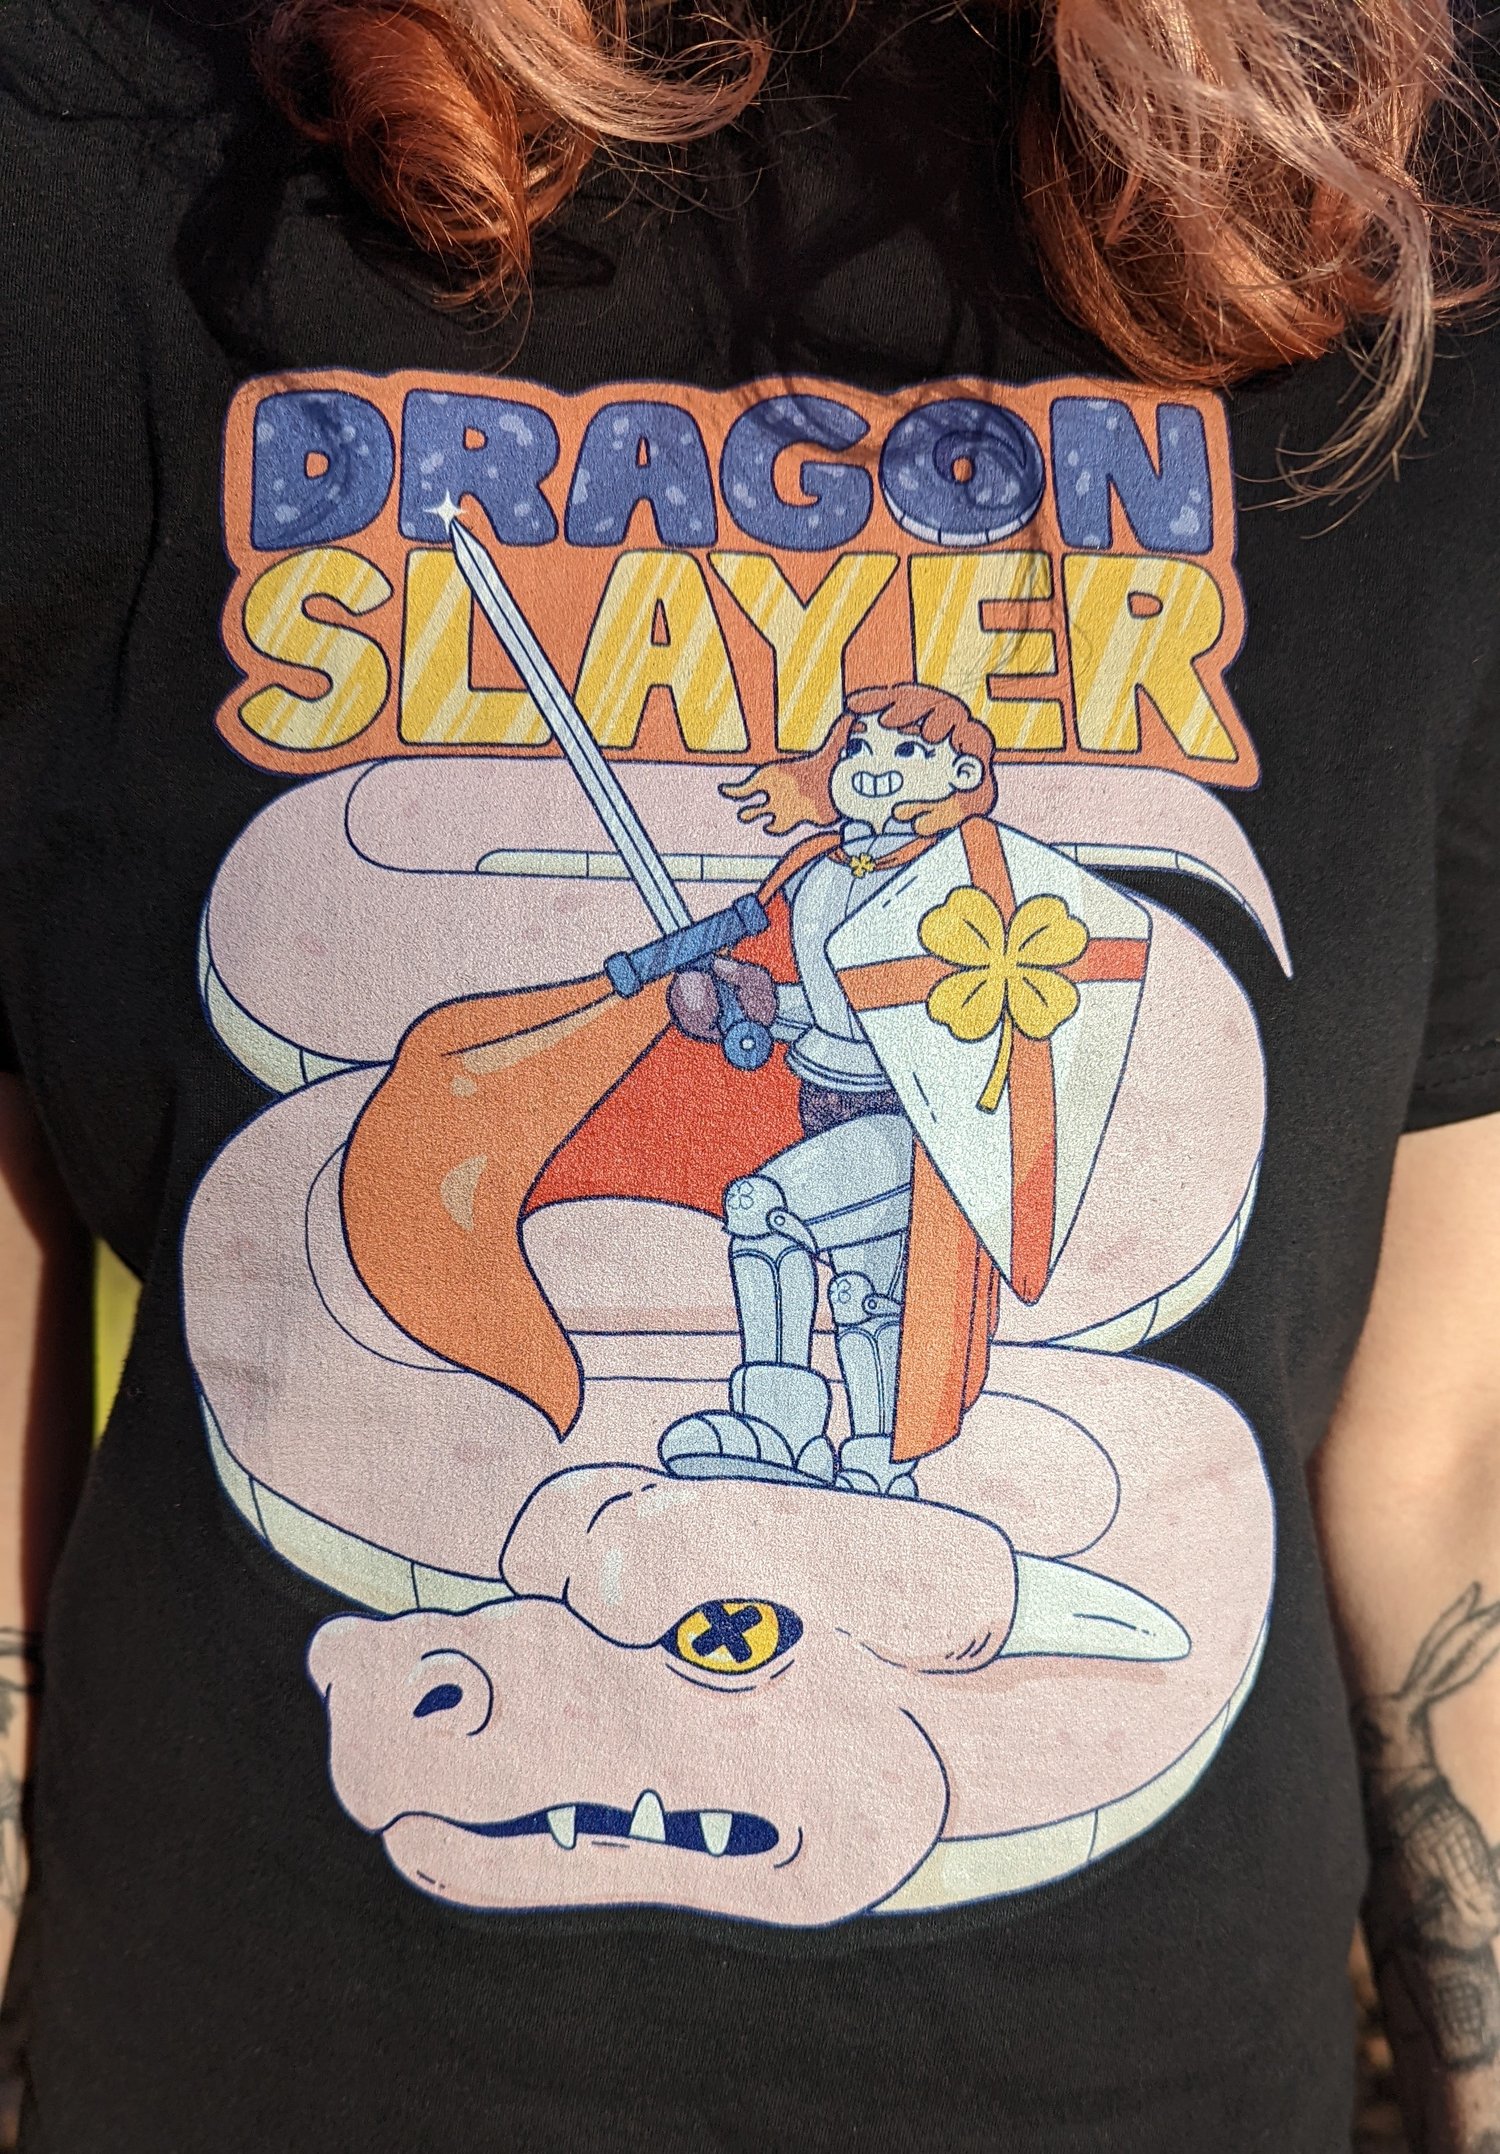 Demon Slayer Black T-Shirt *PRE-ORDER*